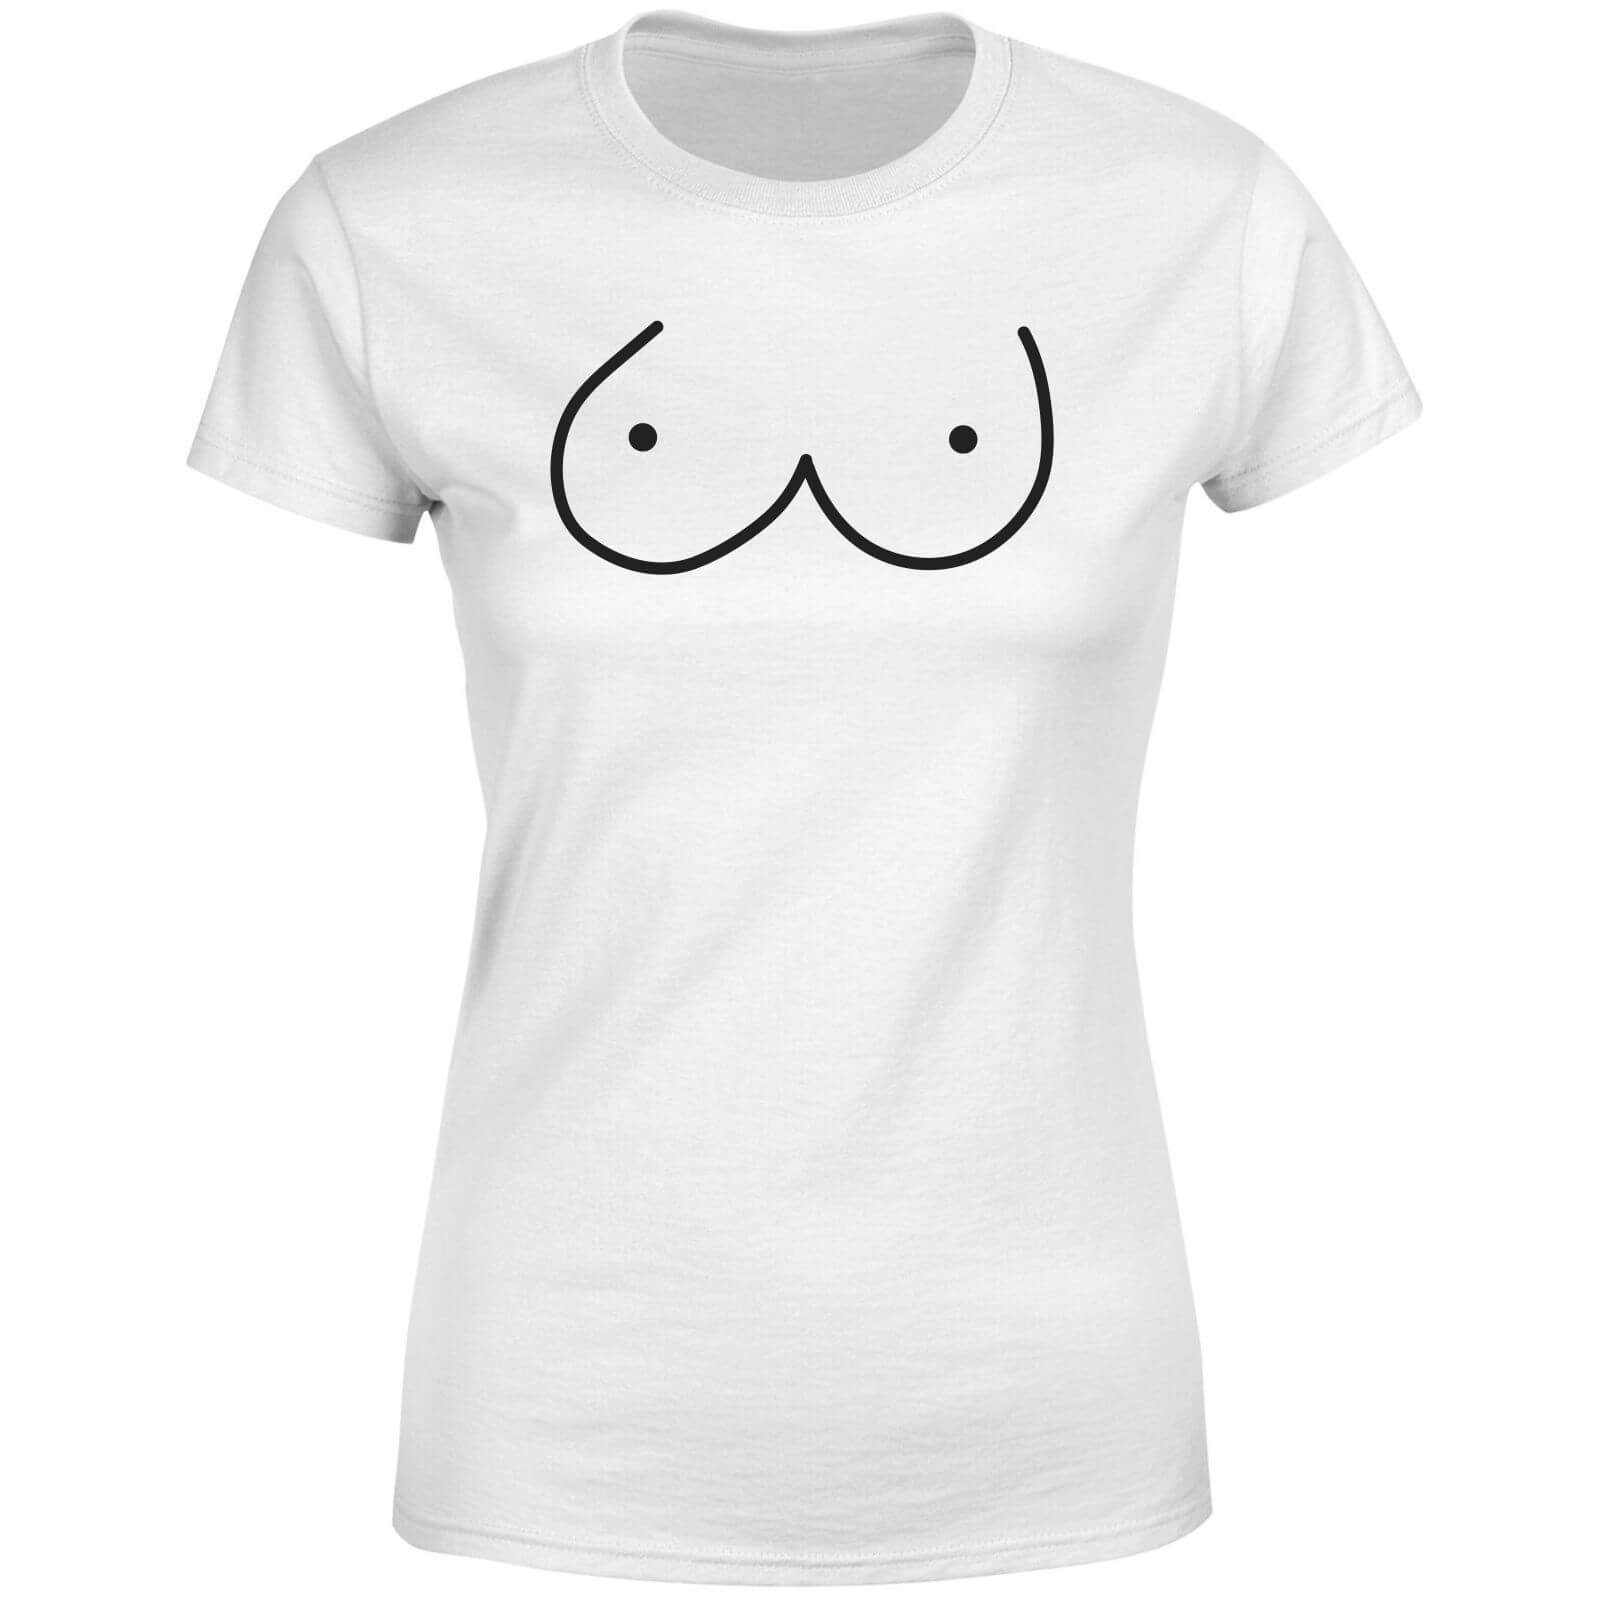 Perky Babs Women's T-Shirt - White - XS